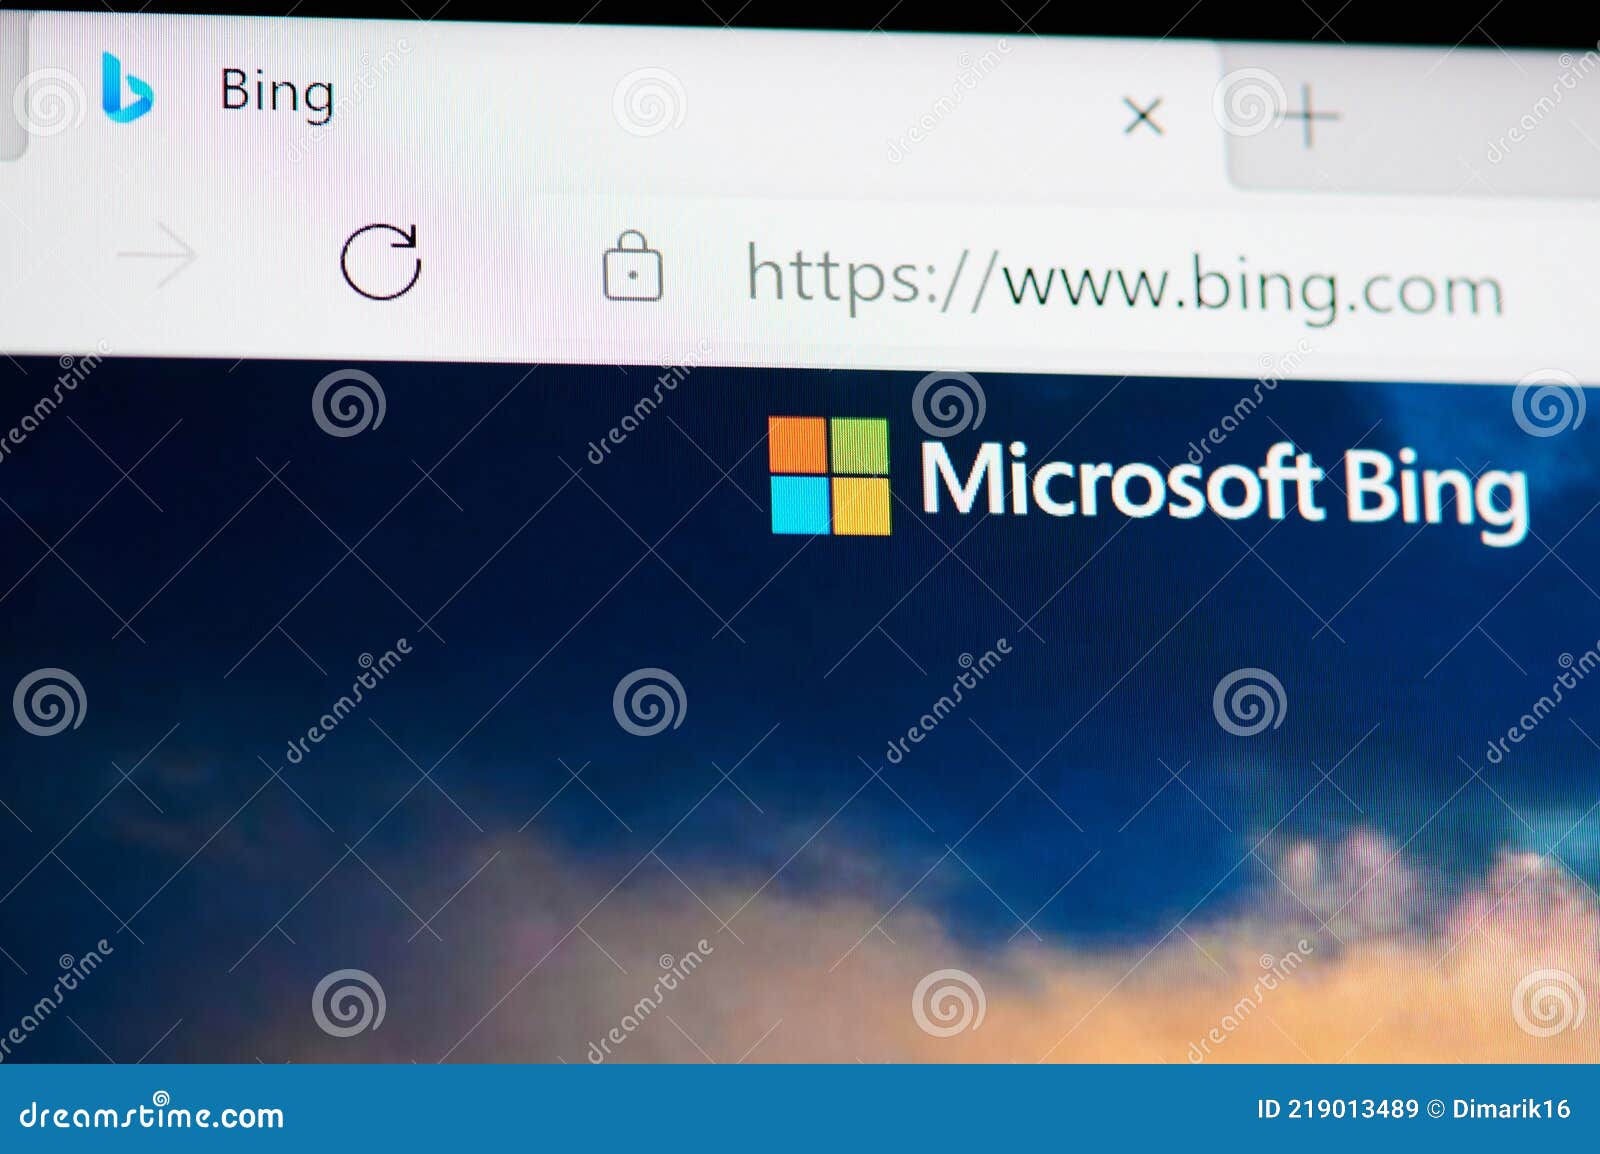 Bing microsoft Bing for